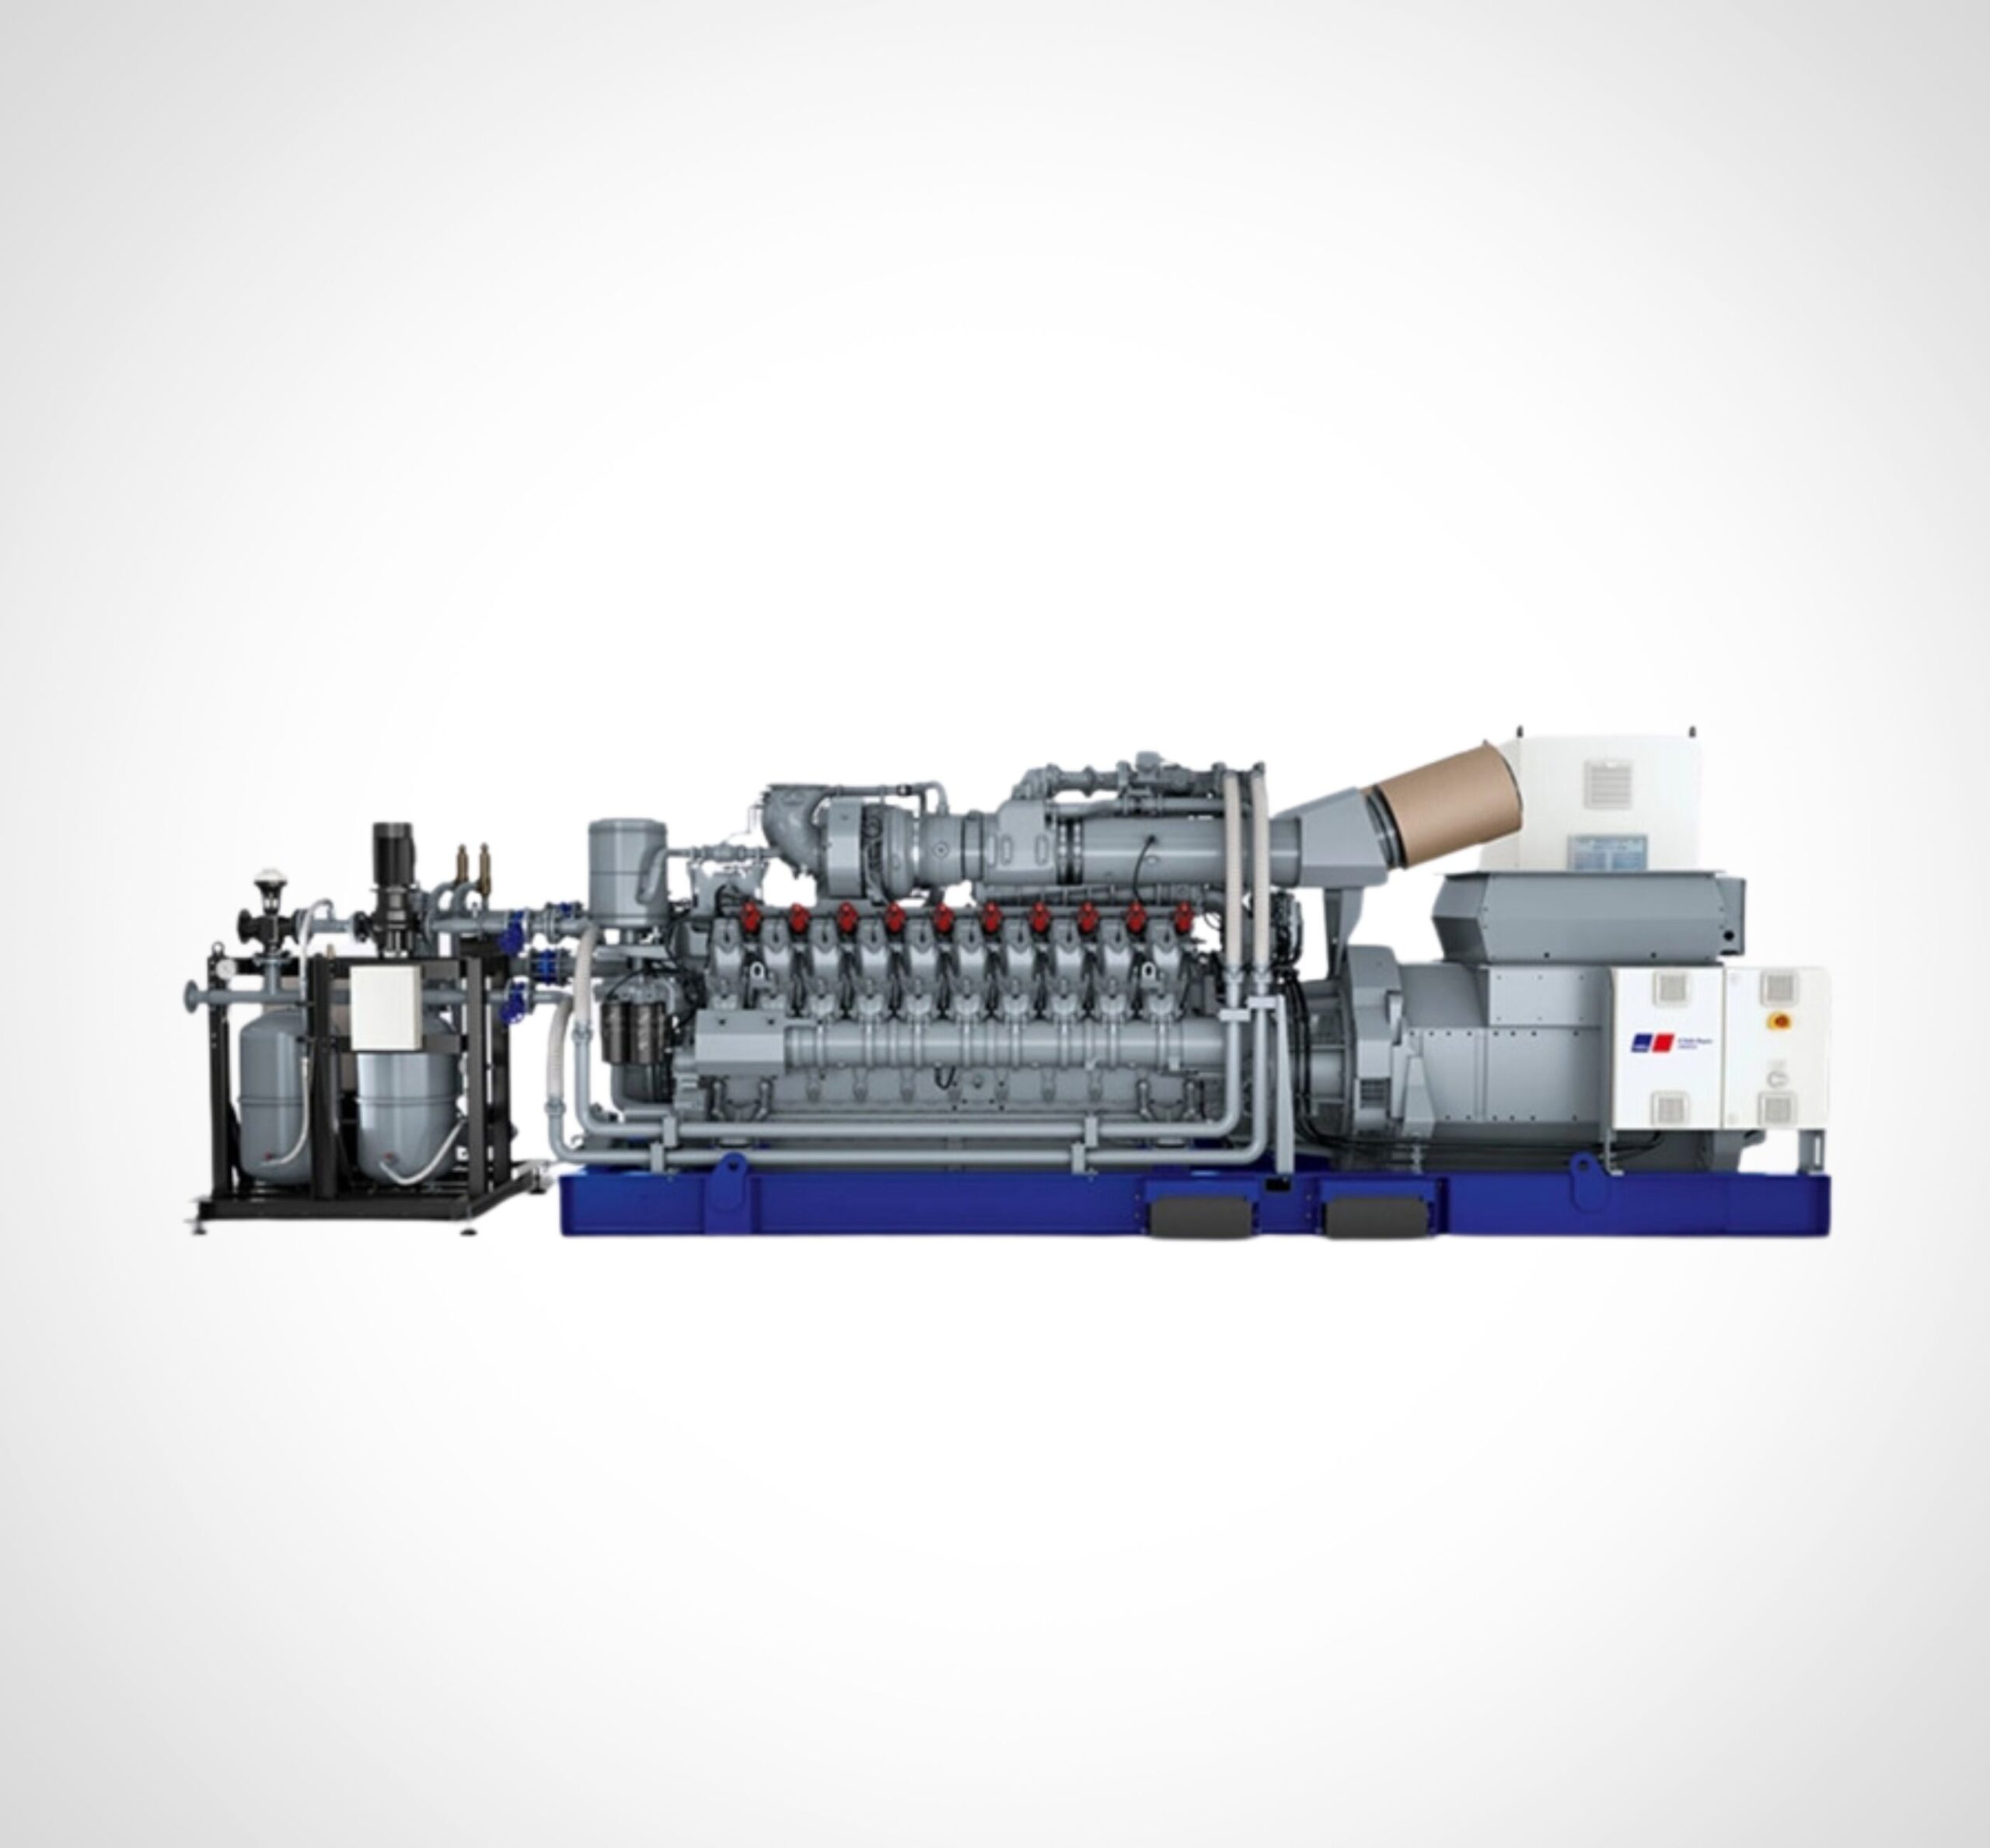 Gas Generator-MTU (Rolls Royce Group Co), Germany